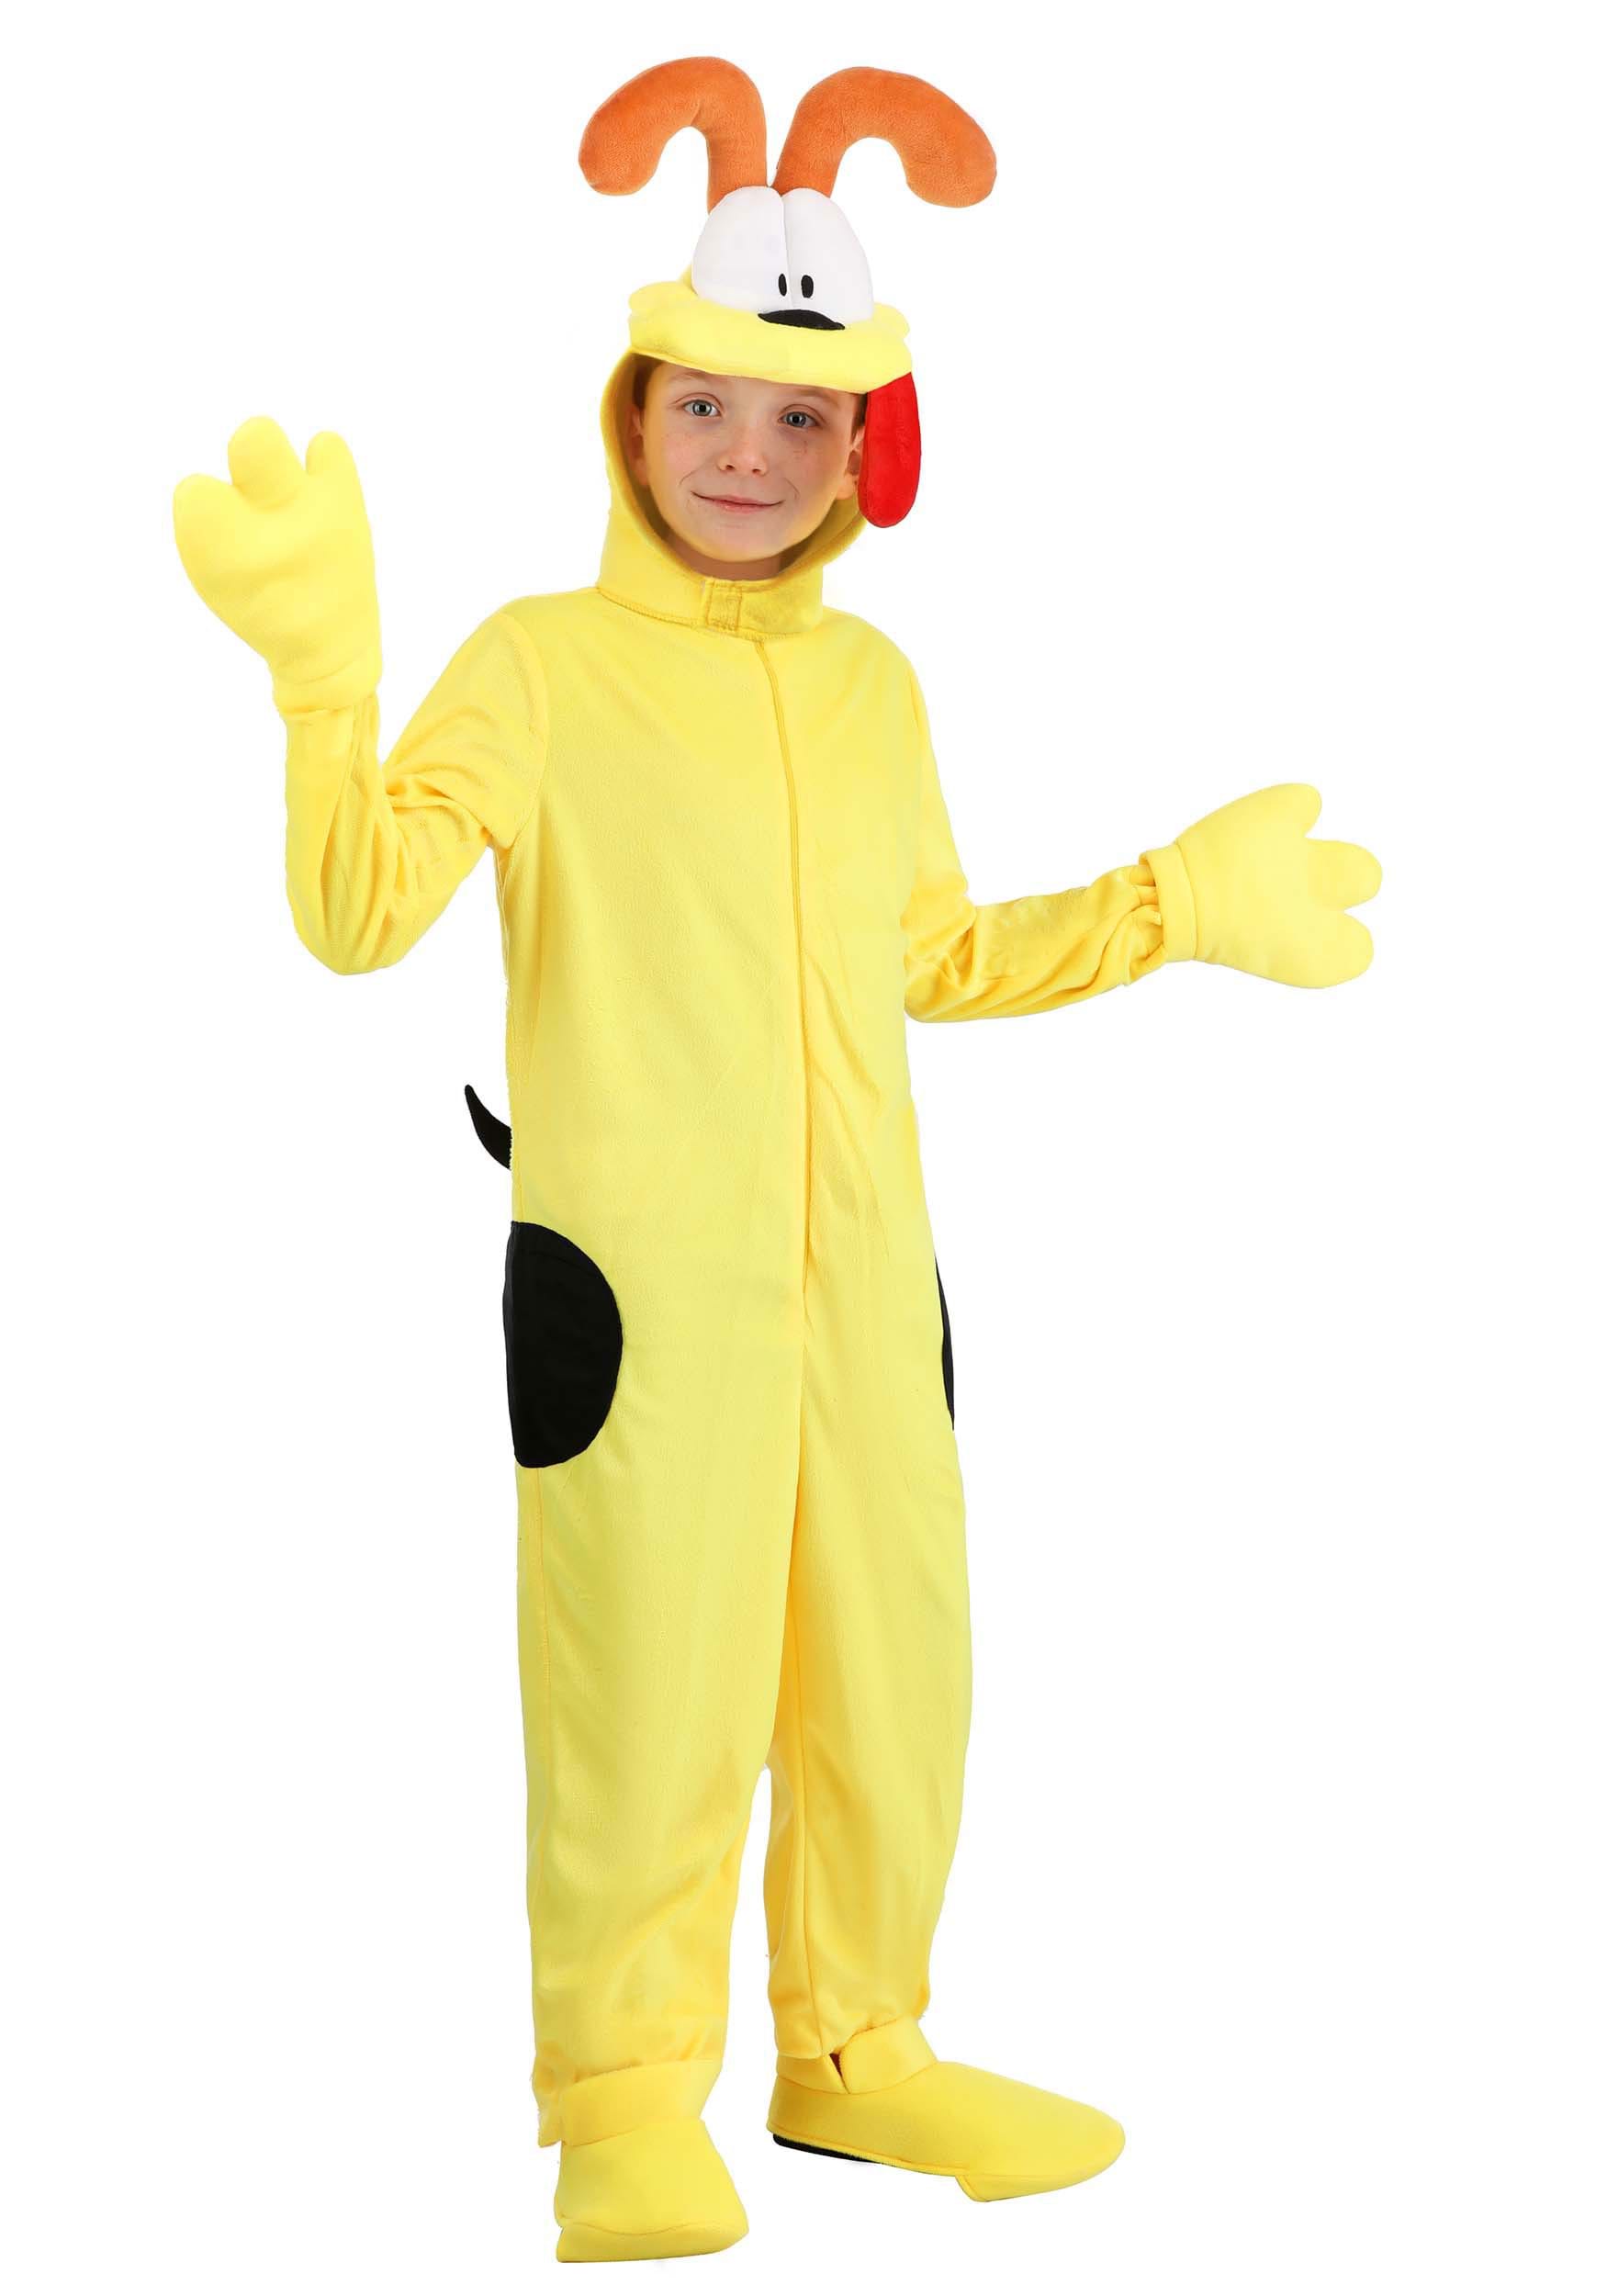 Garfield Odie Costume for Kids